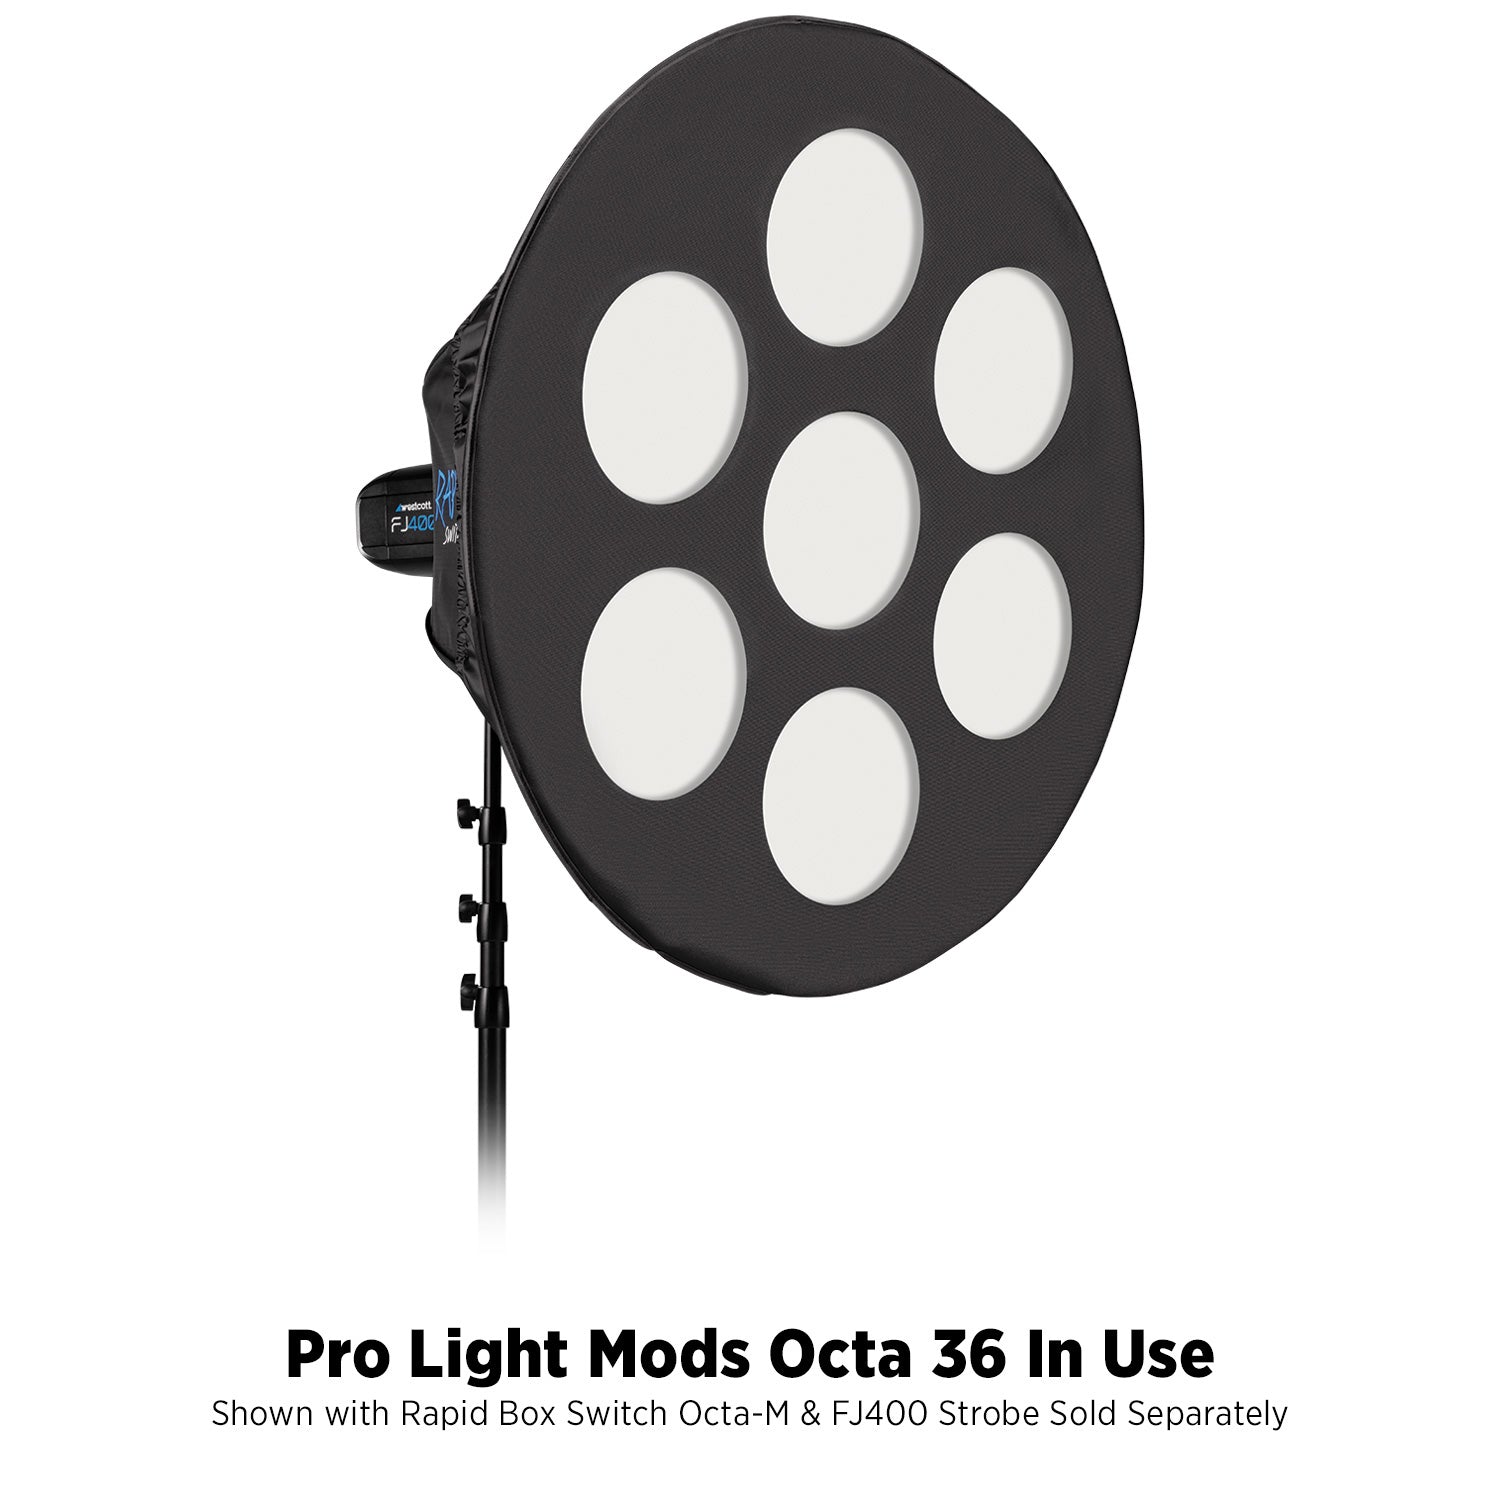 Pro Light Mods Octa 36